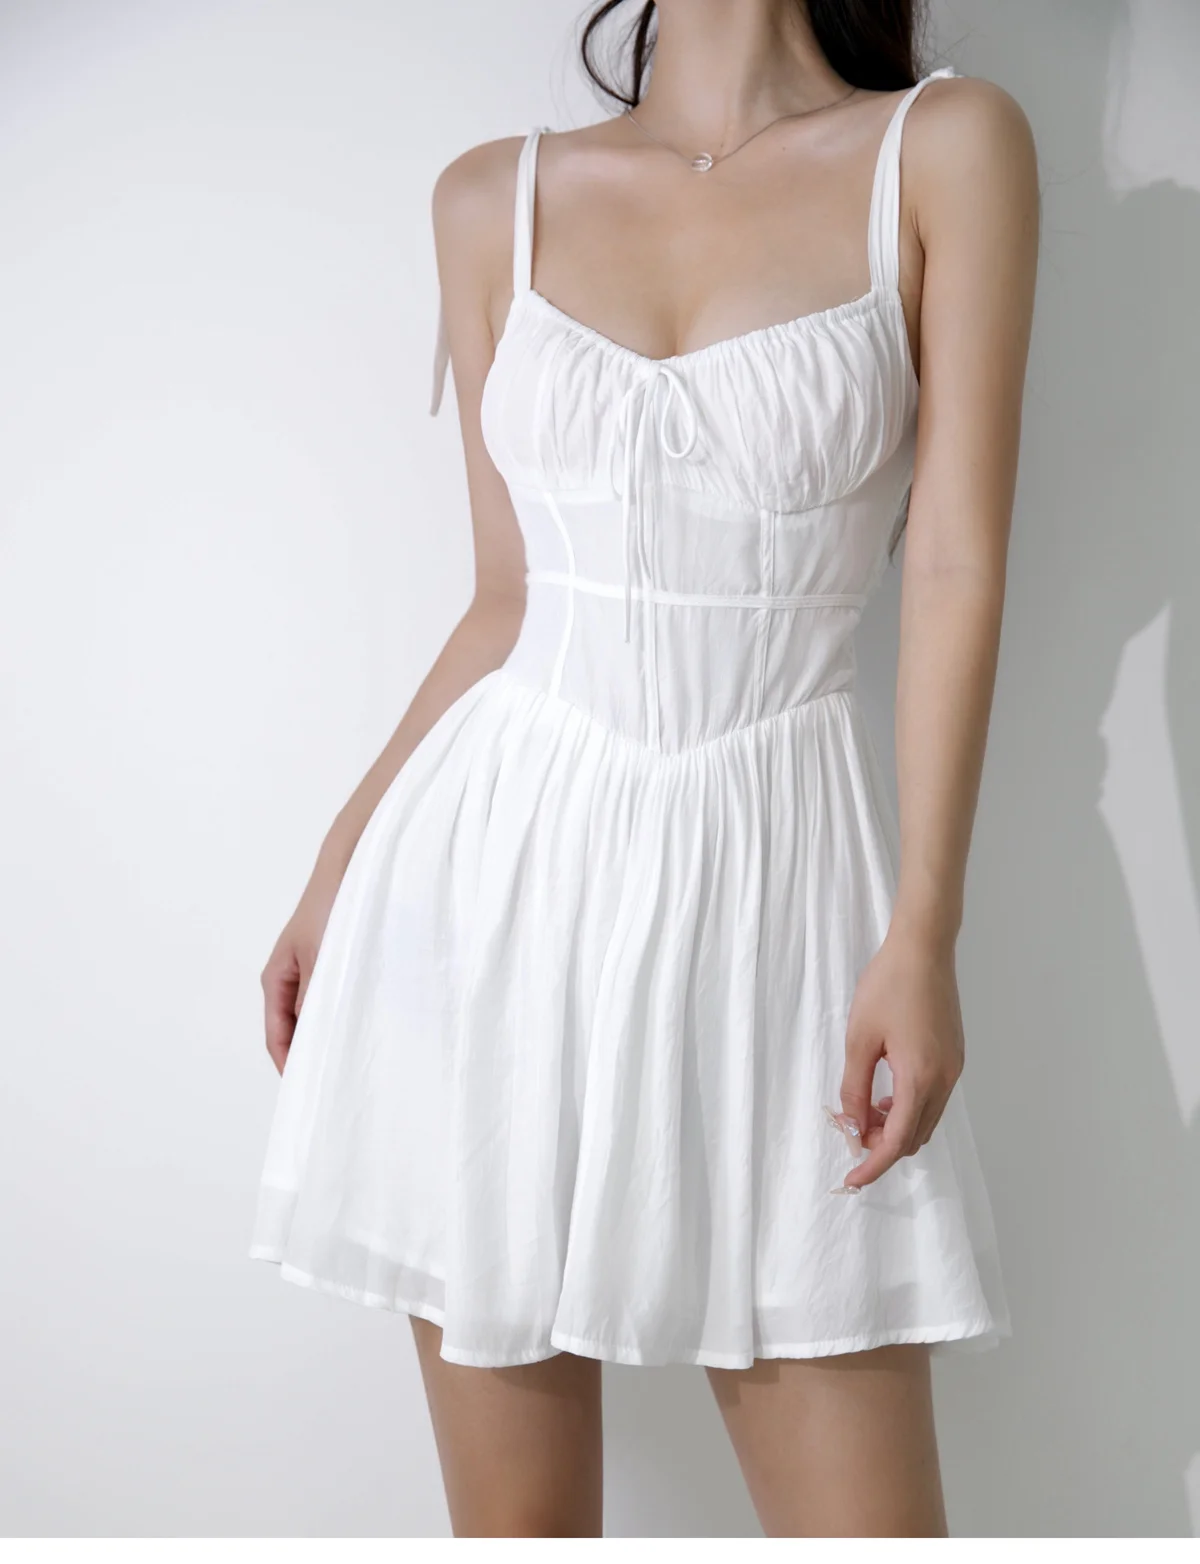 

Women's Summer Mini Dress Casual Sleeveless Bow Tie Shoulder Ruched Bust Babydoll Dress Beachwear